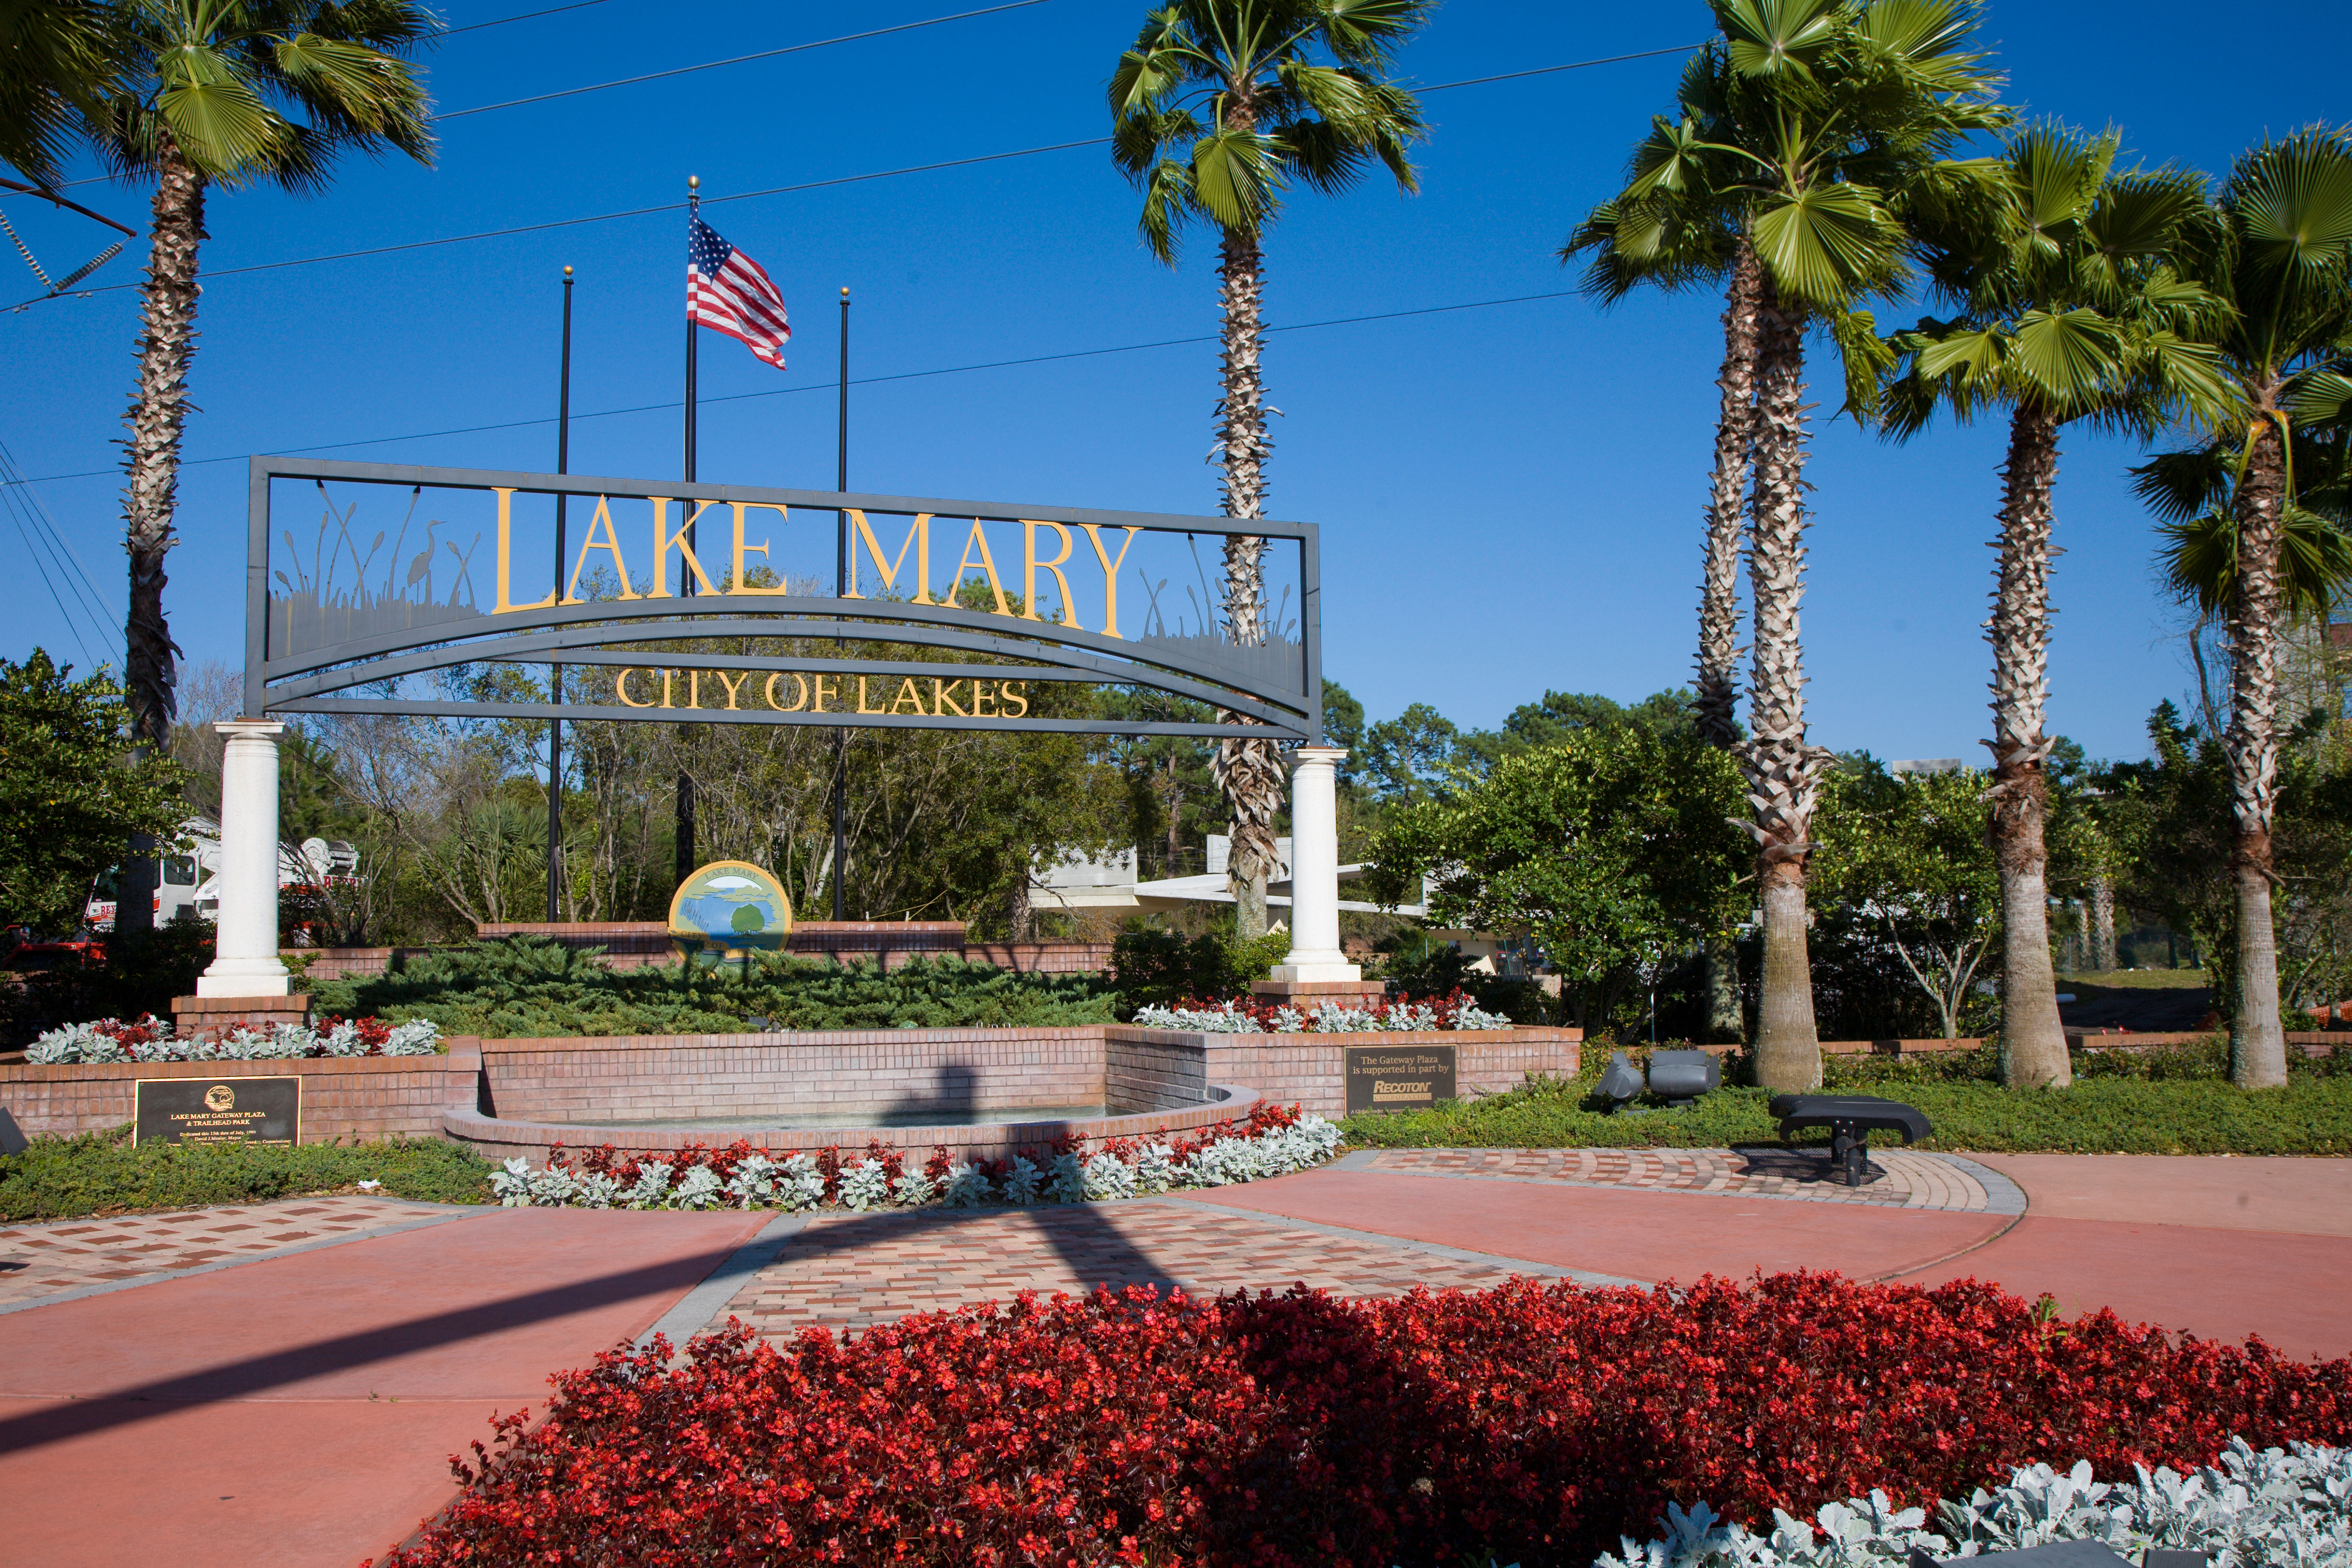 Entrance display to City of Lake Mary, Florida